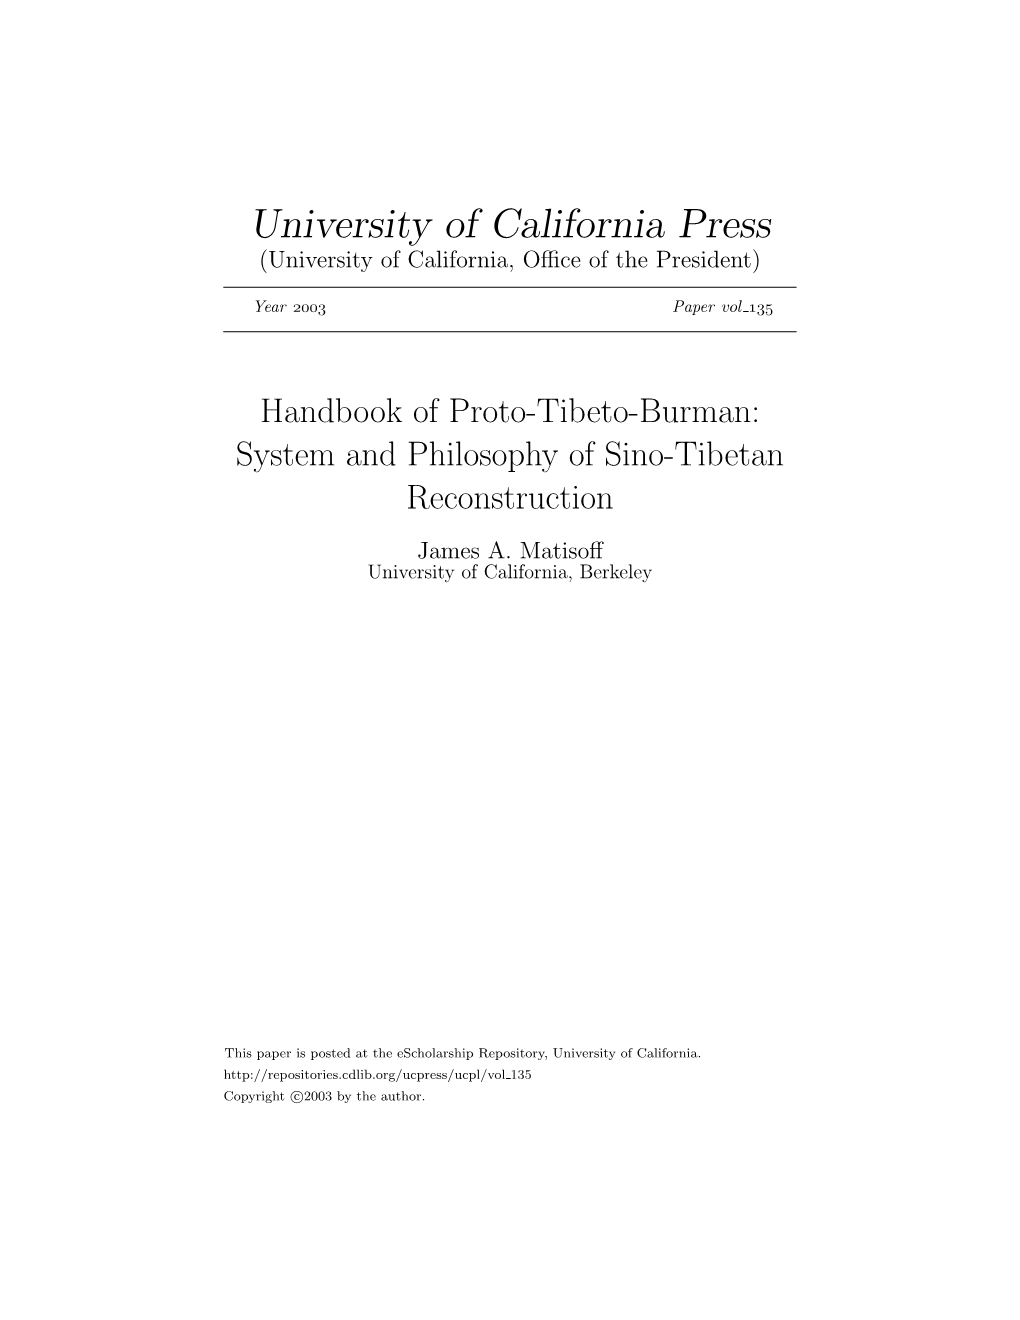 University of California Press (University of California, Oﬃce of the President)